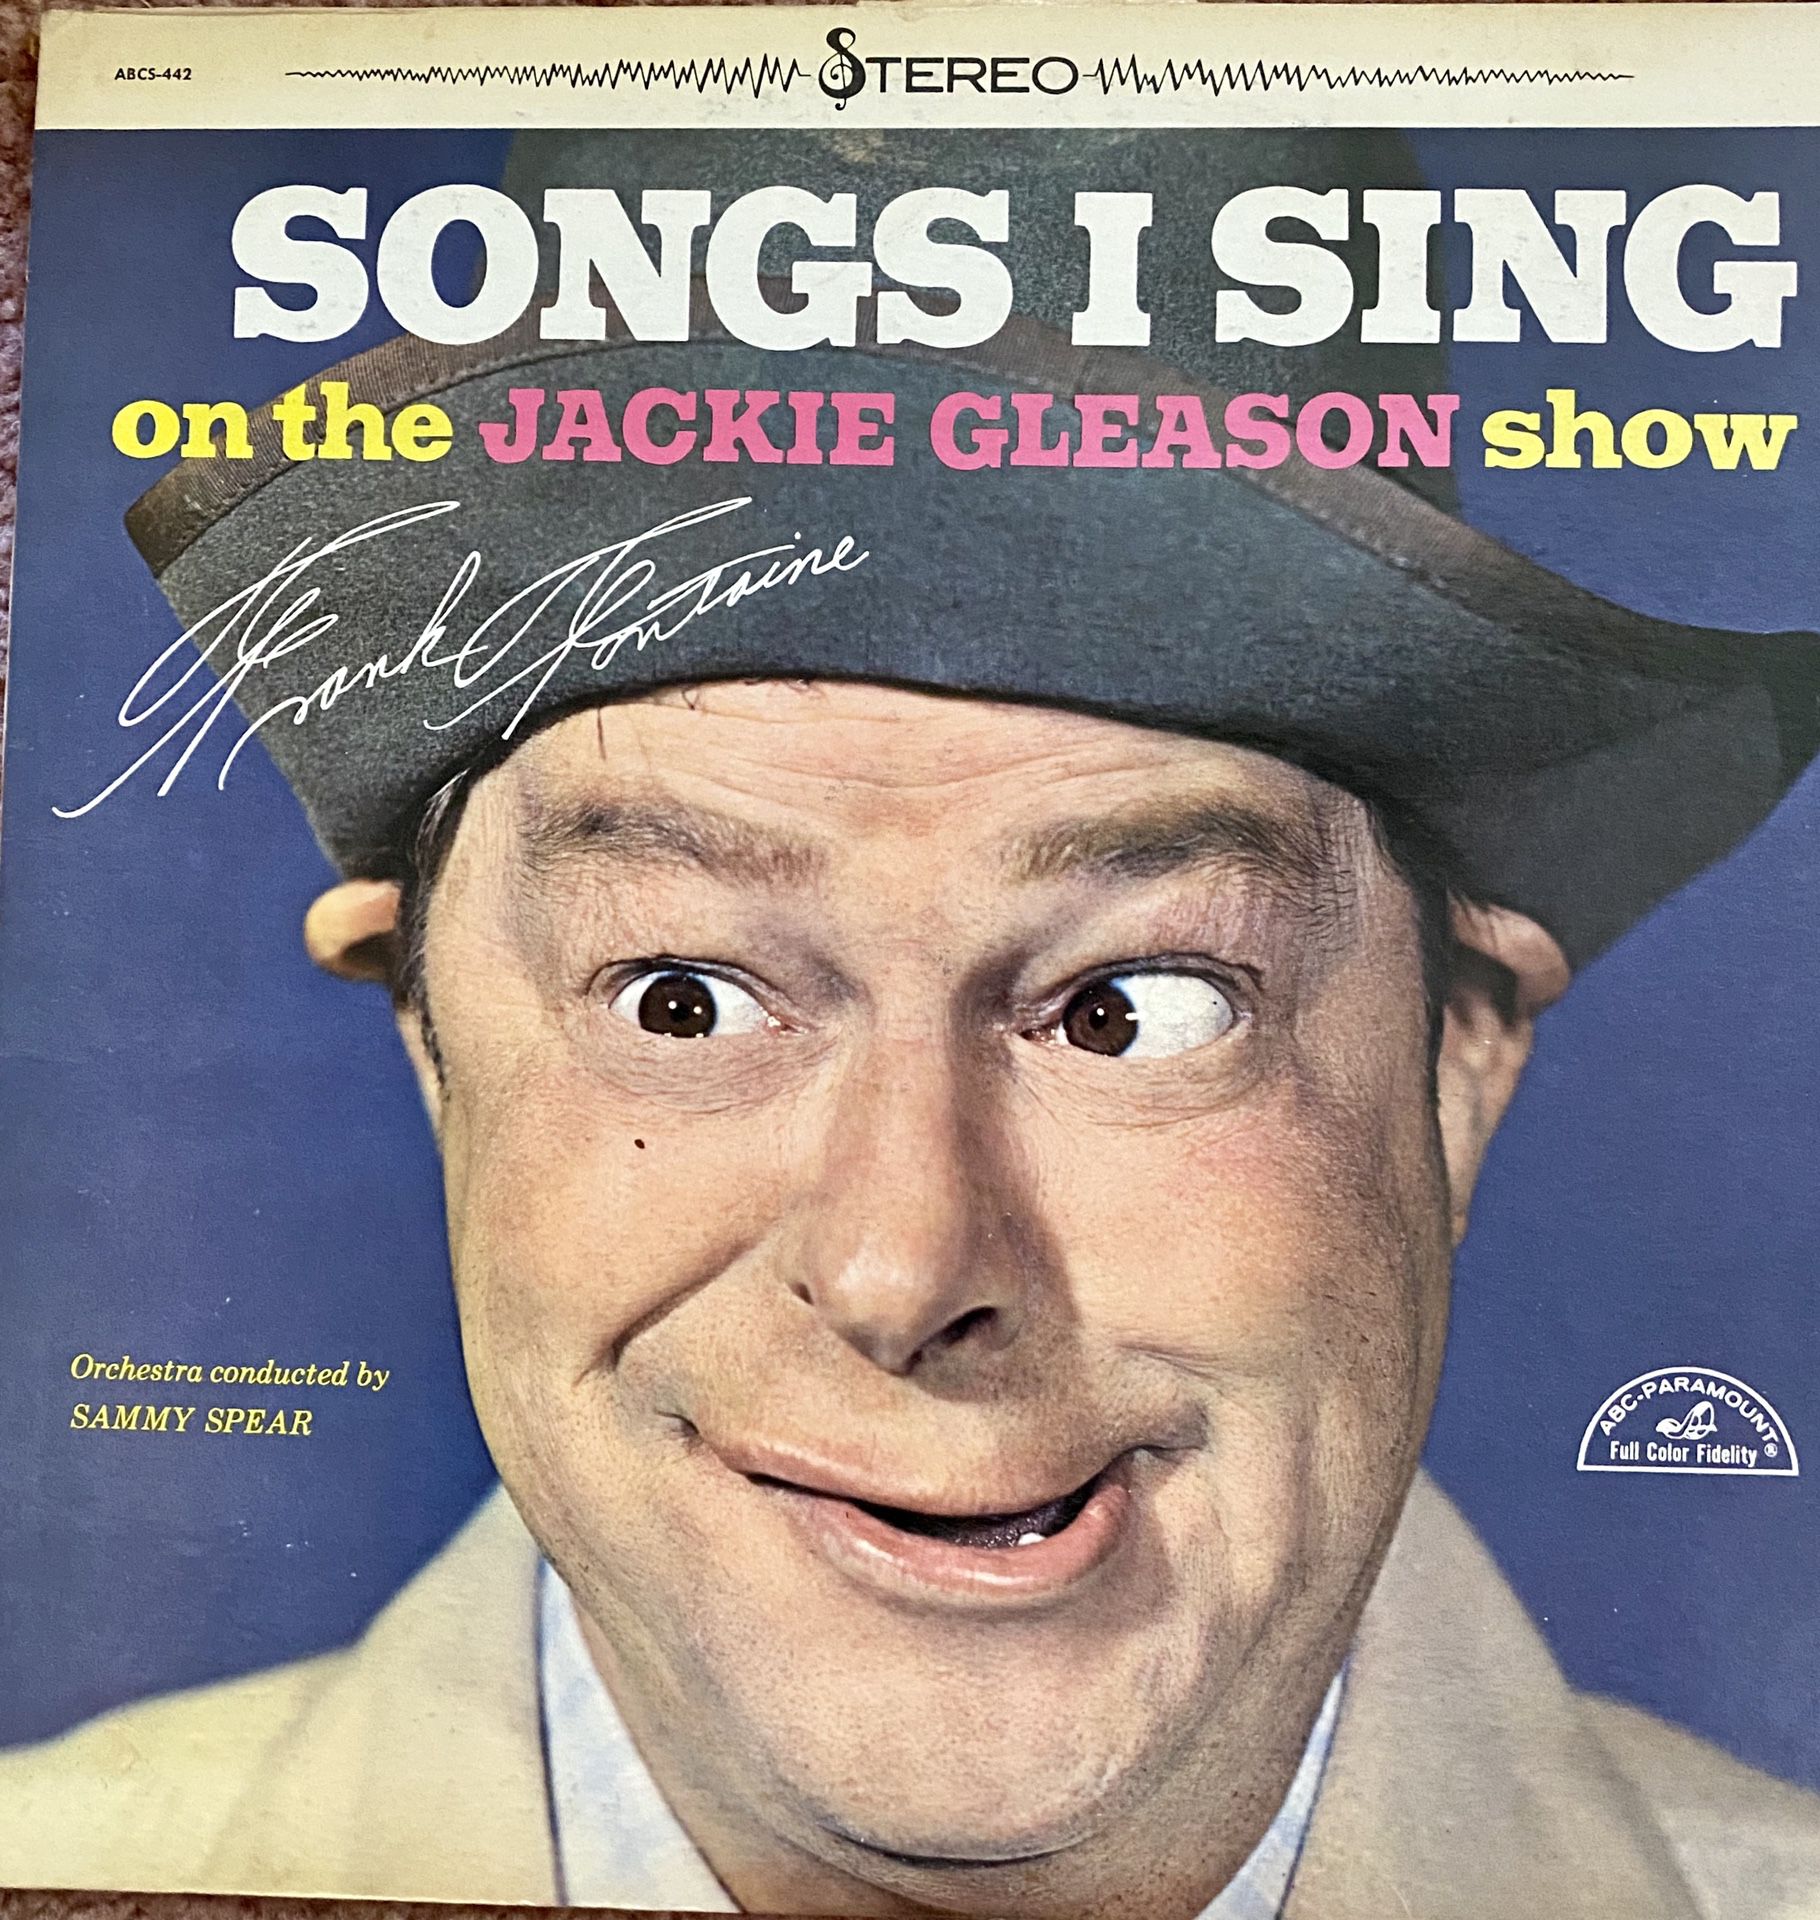 Jackie Gleason Show “Songs I Sing” Vinyl Album $10